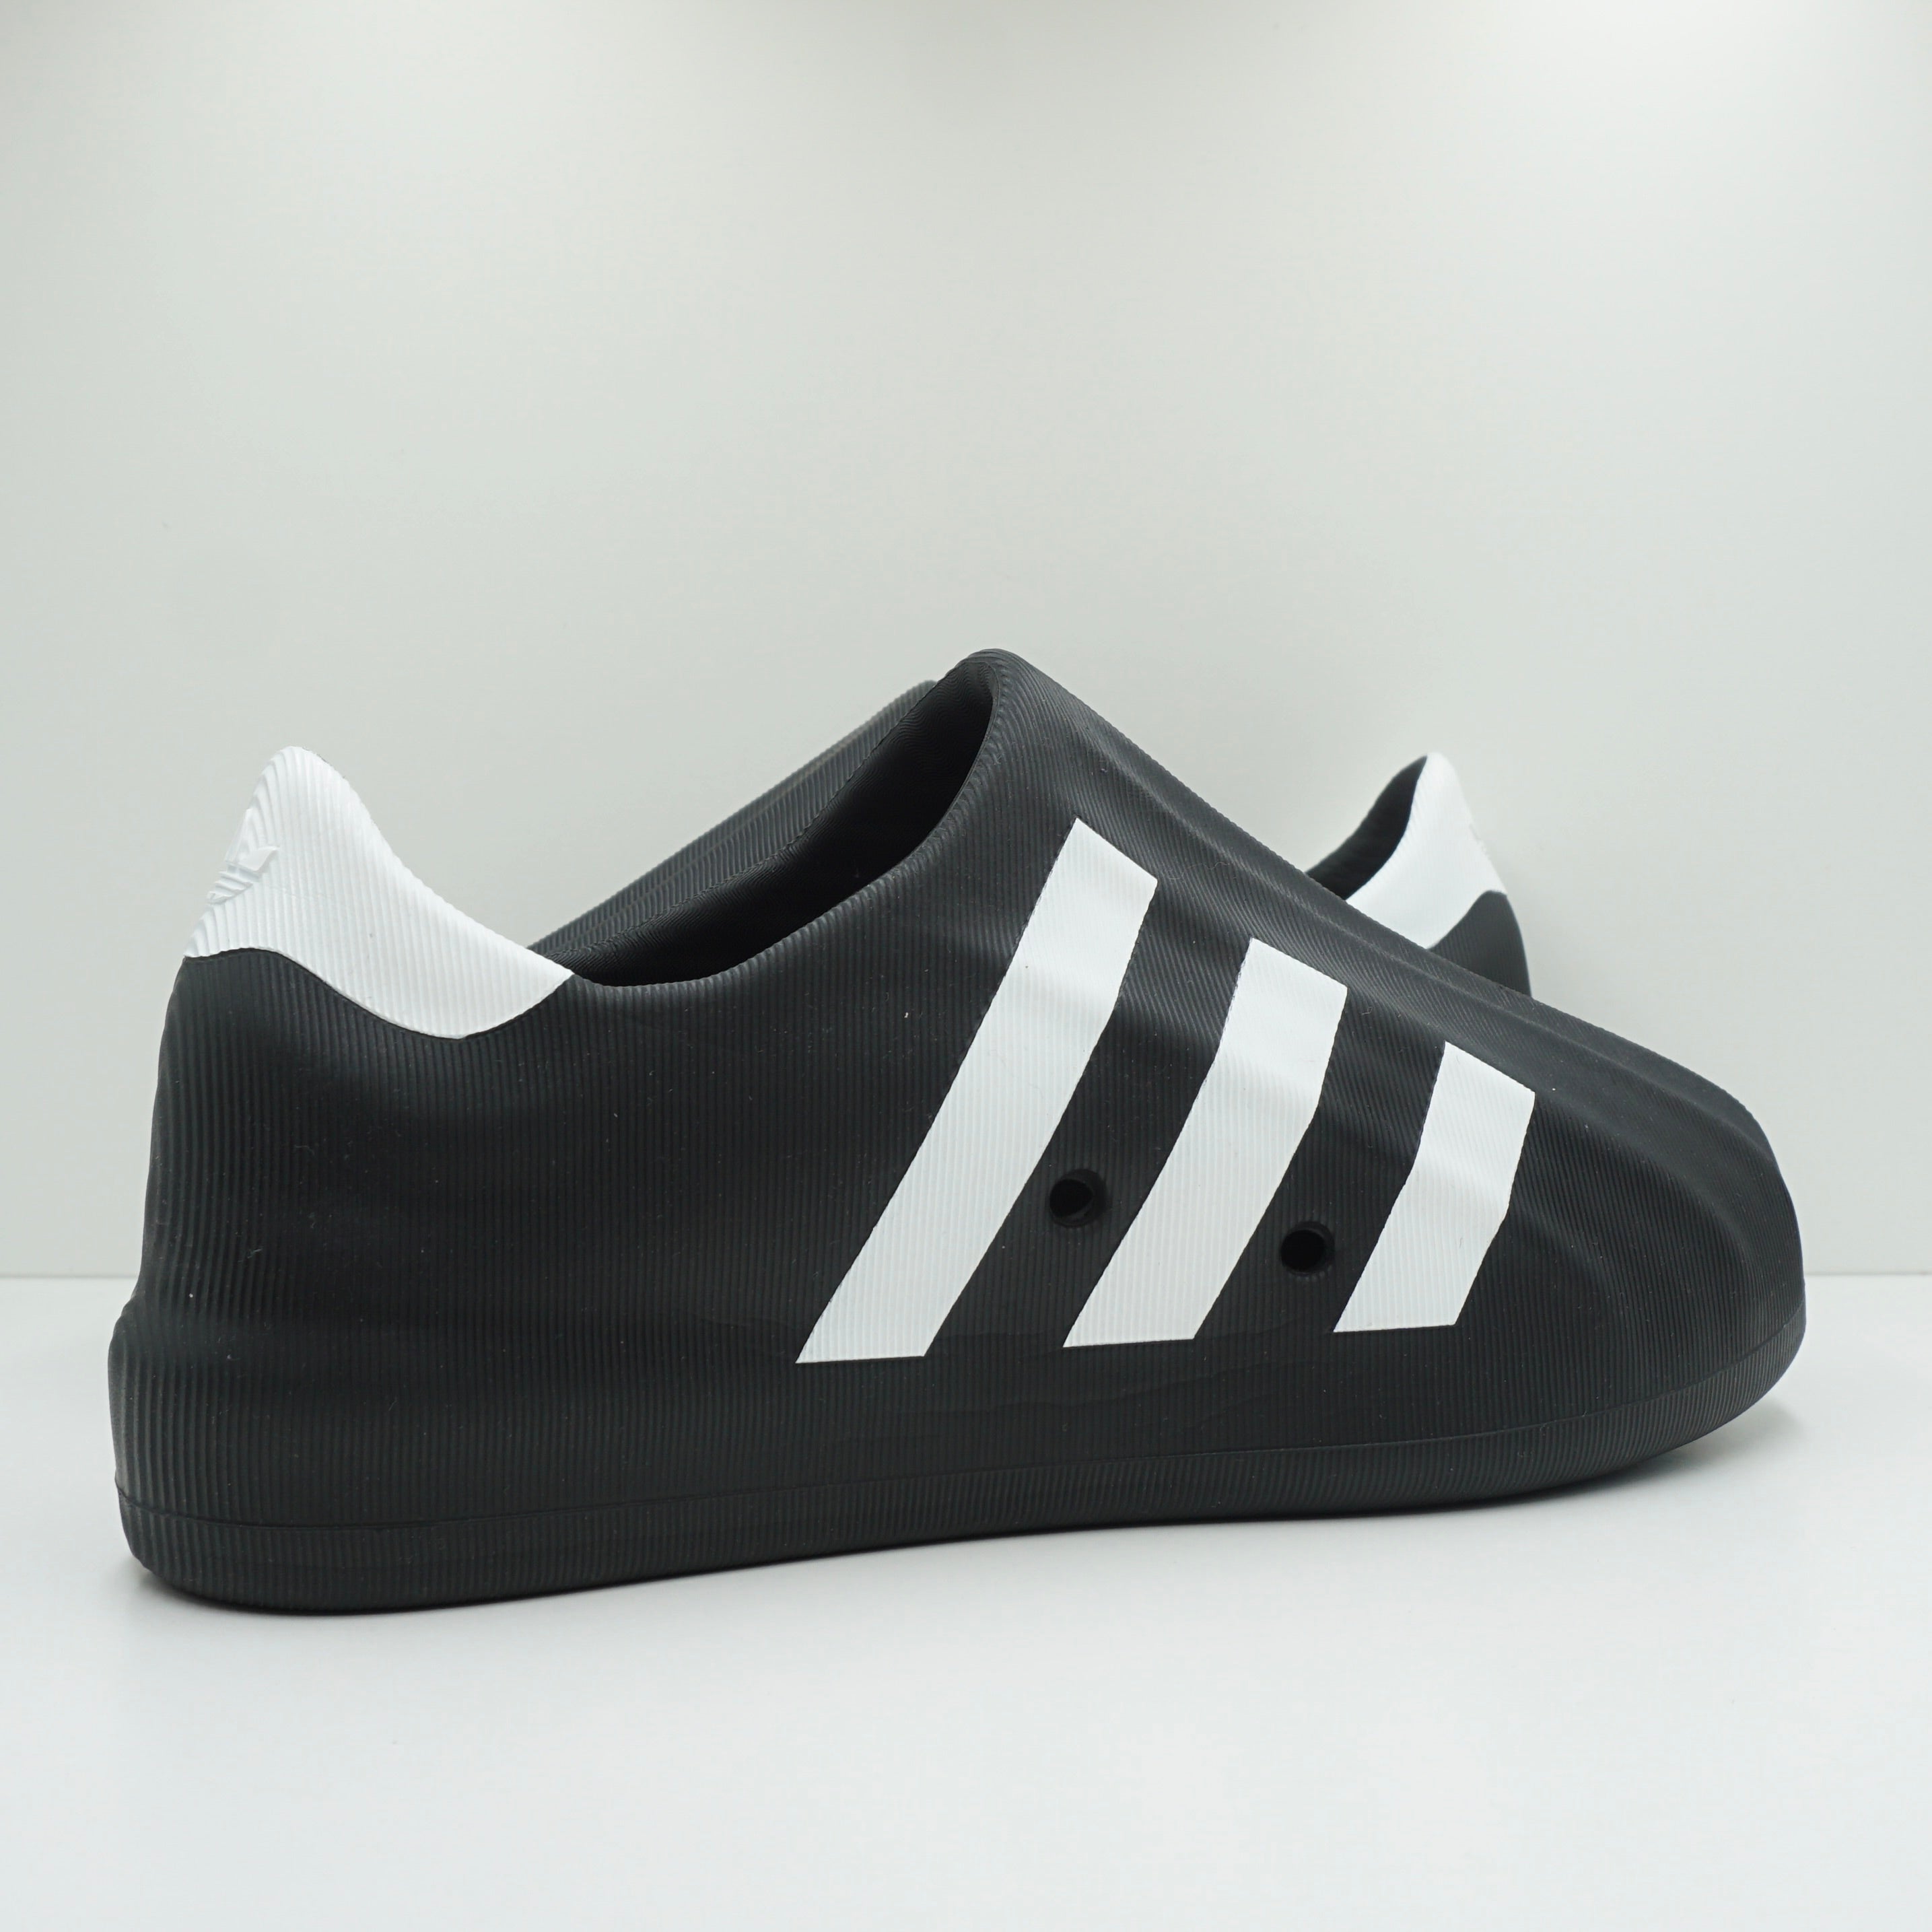 Adidas adiFOM Superstar Black White